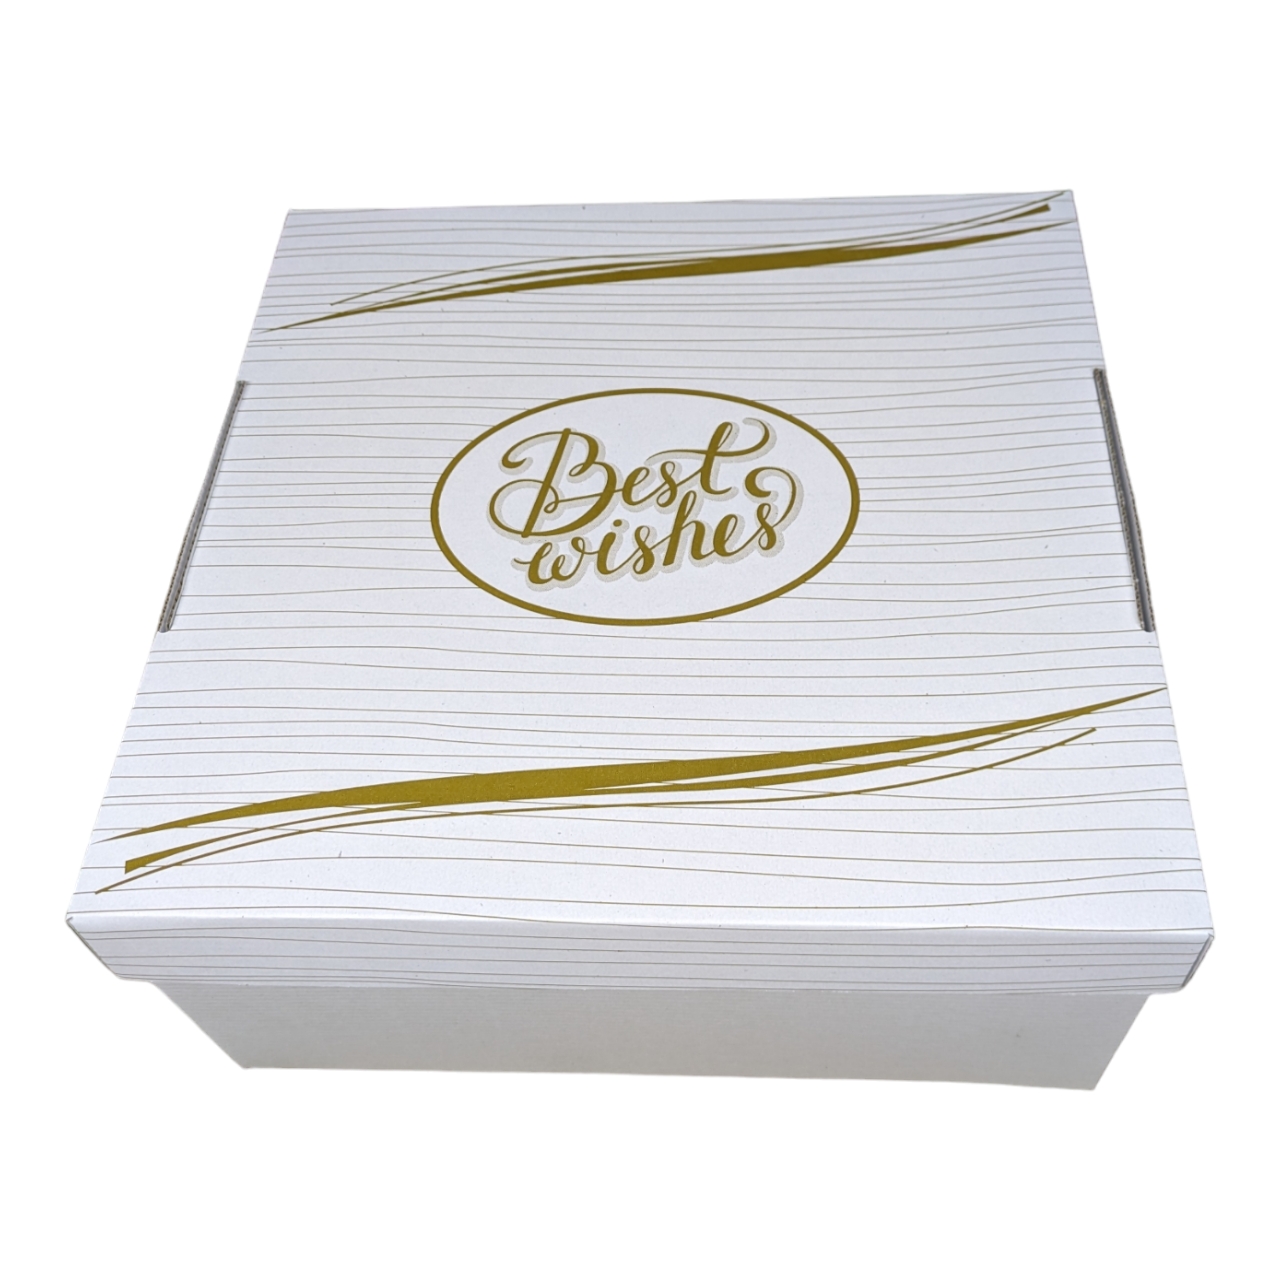 50 x Tortenkarton Professional Line - 32 x 32 x 15 cm  (2-teilig)